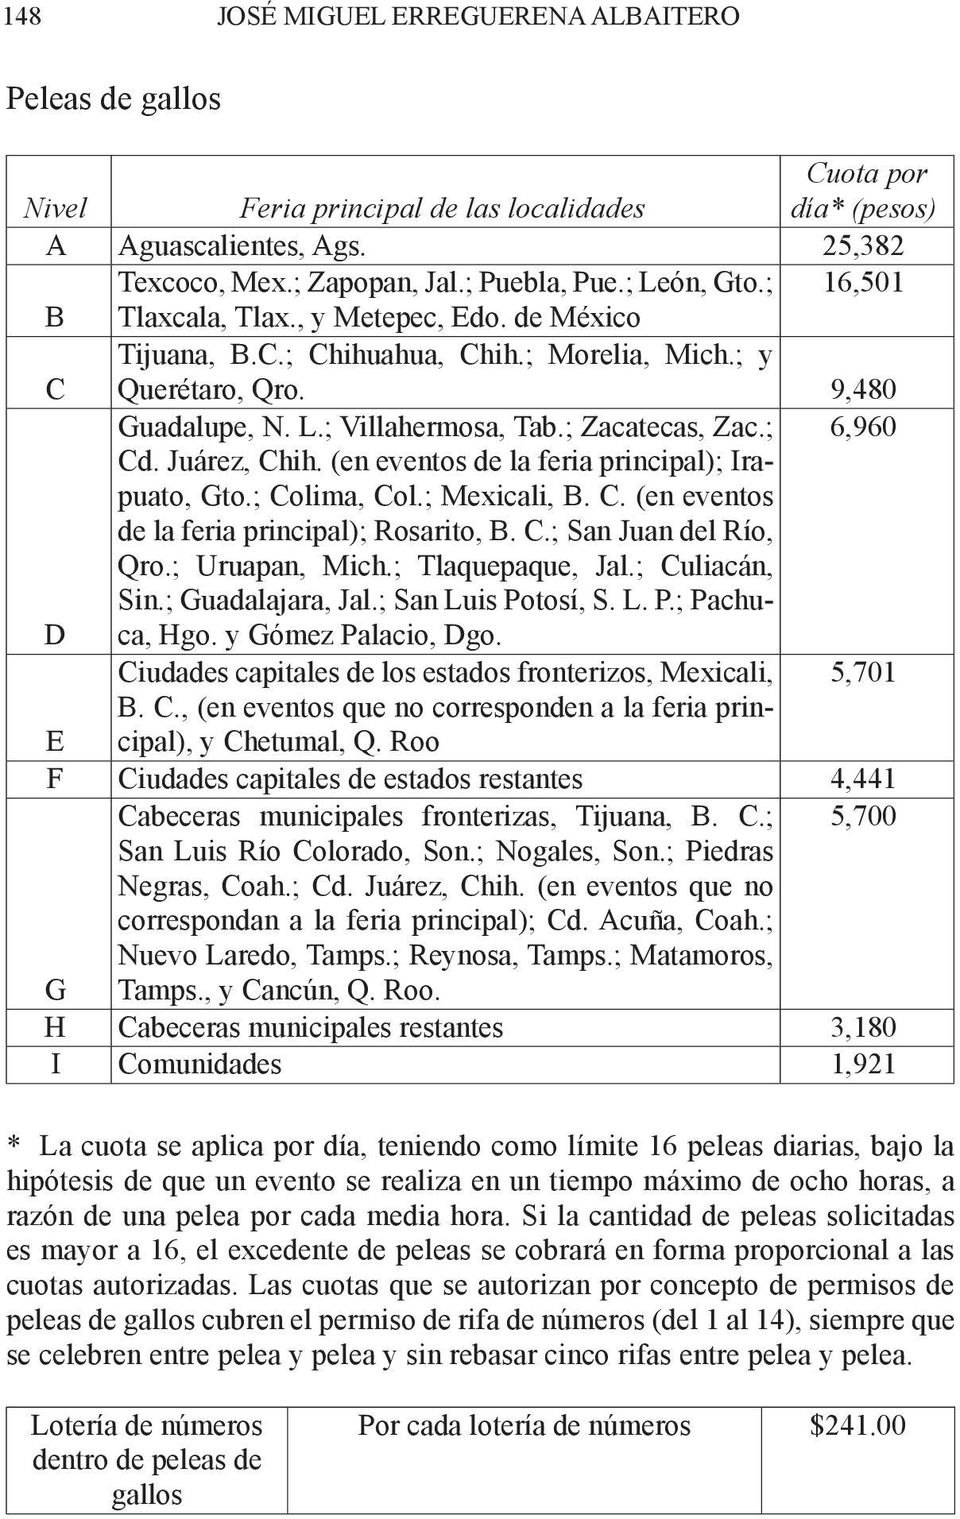 ; 6,960 D Cd. Juárez, Chih. (en eventos de la feria principal); Irapuato, Gto.; Colima, Col.; Mexicali, B. C. (en eventos de la feria principal); Rosarito, B. C.; San Juan del Río, Qro.